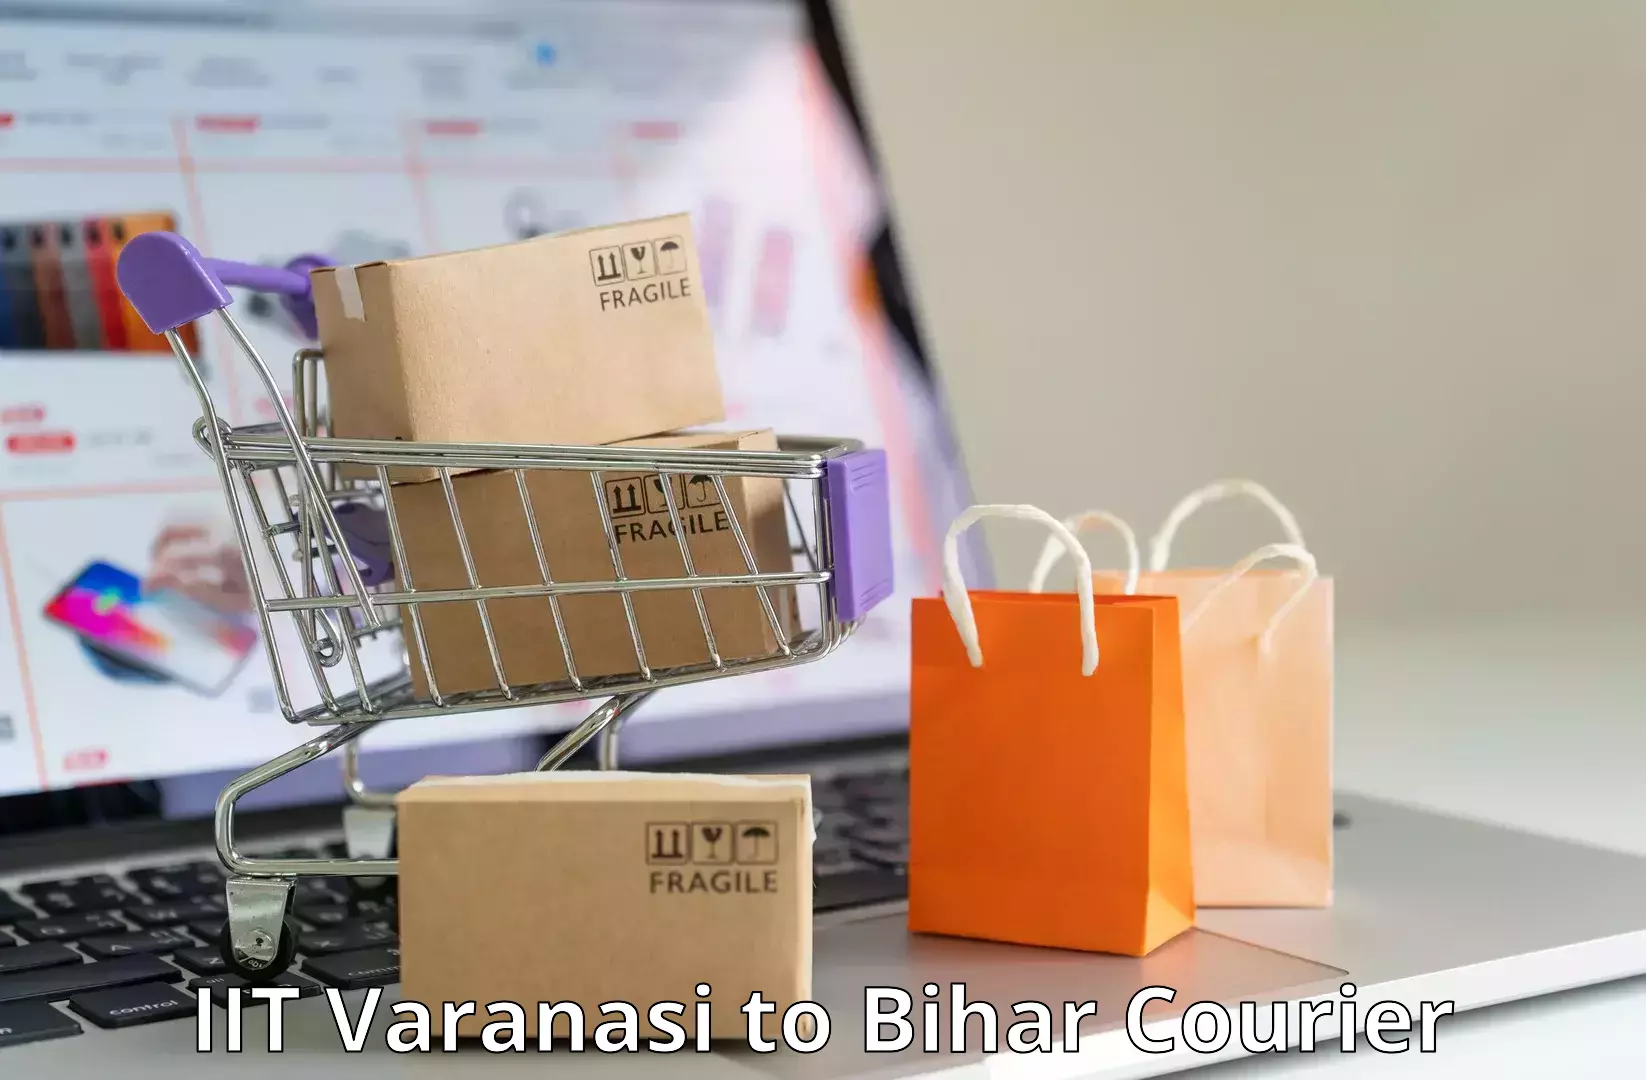 24-hour courier service IIT Varanasi to Jagdishpur Bhojpur